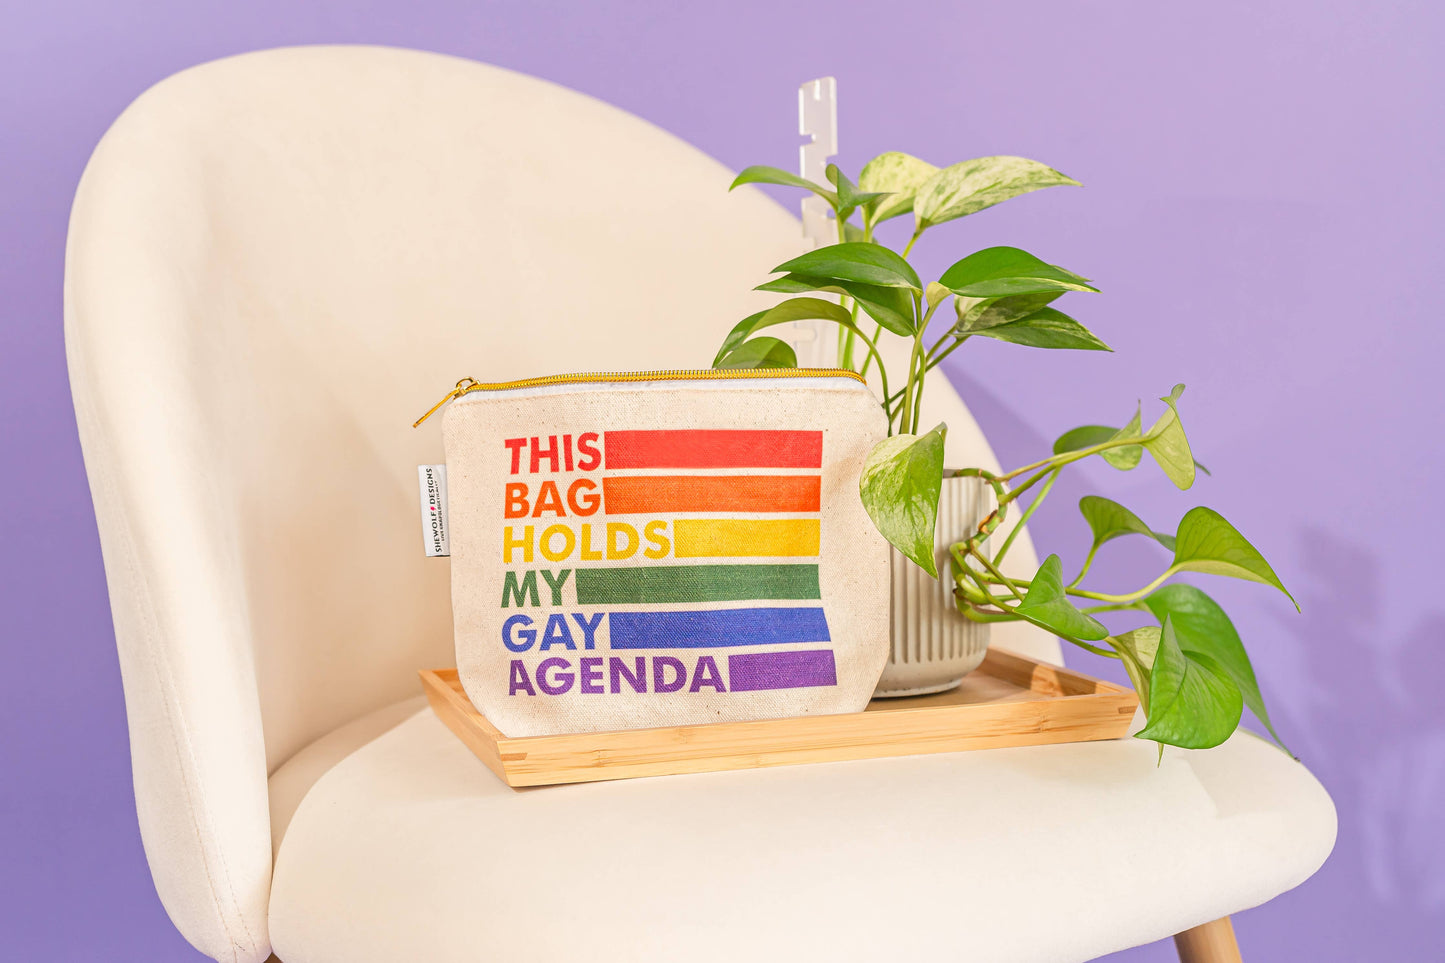 My Gay Agenda Pride Pouch | LGBTQ+ Rainbow Makeup Bag